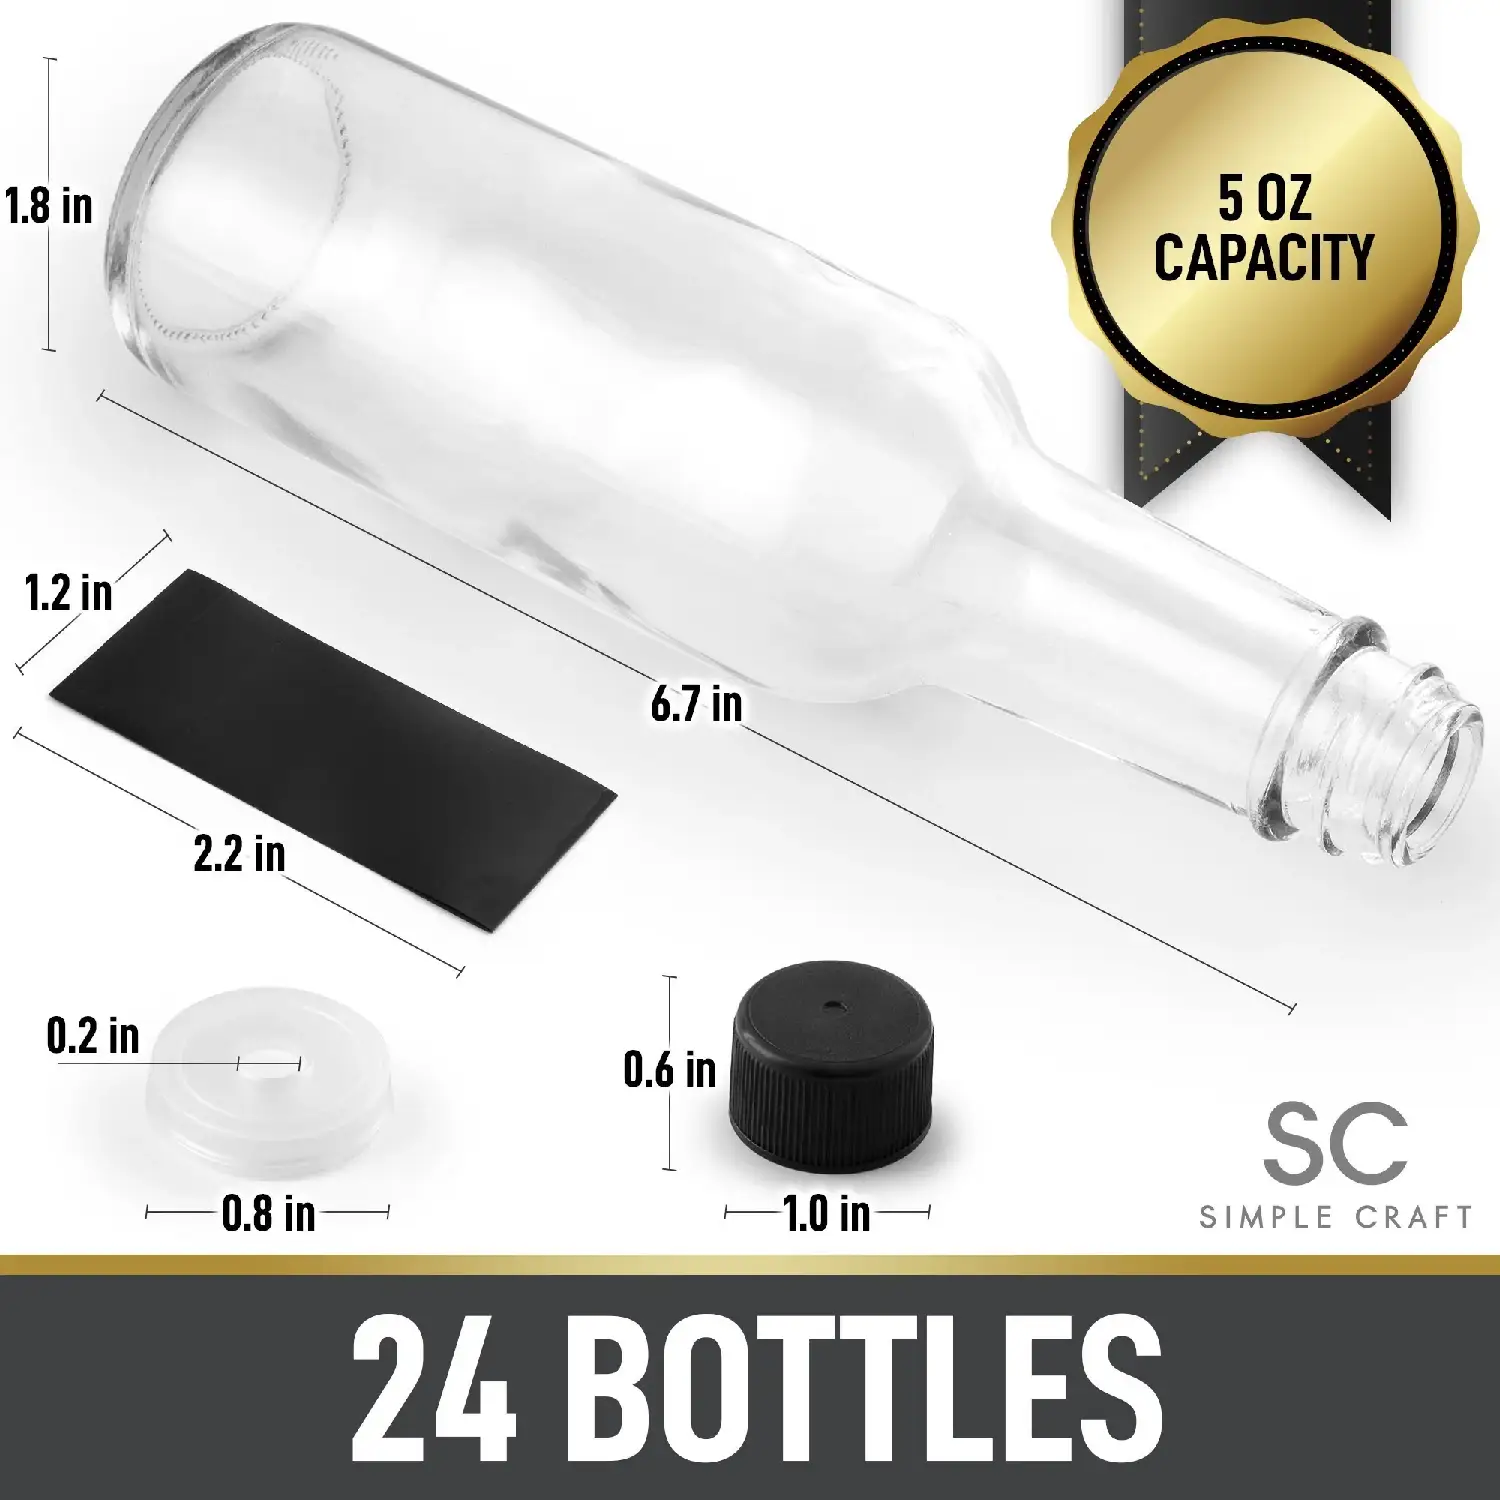 Simple Craft Hot Sauce Glass Bottles (5 Oz) - 24 Piece